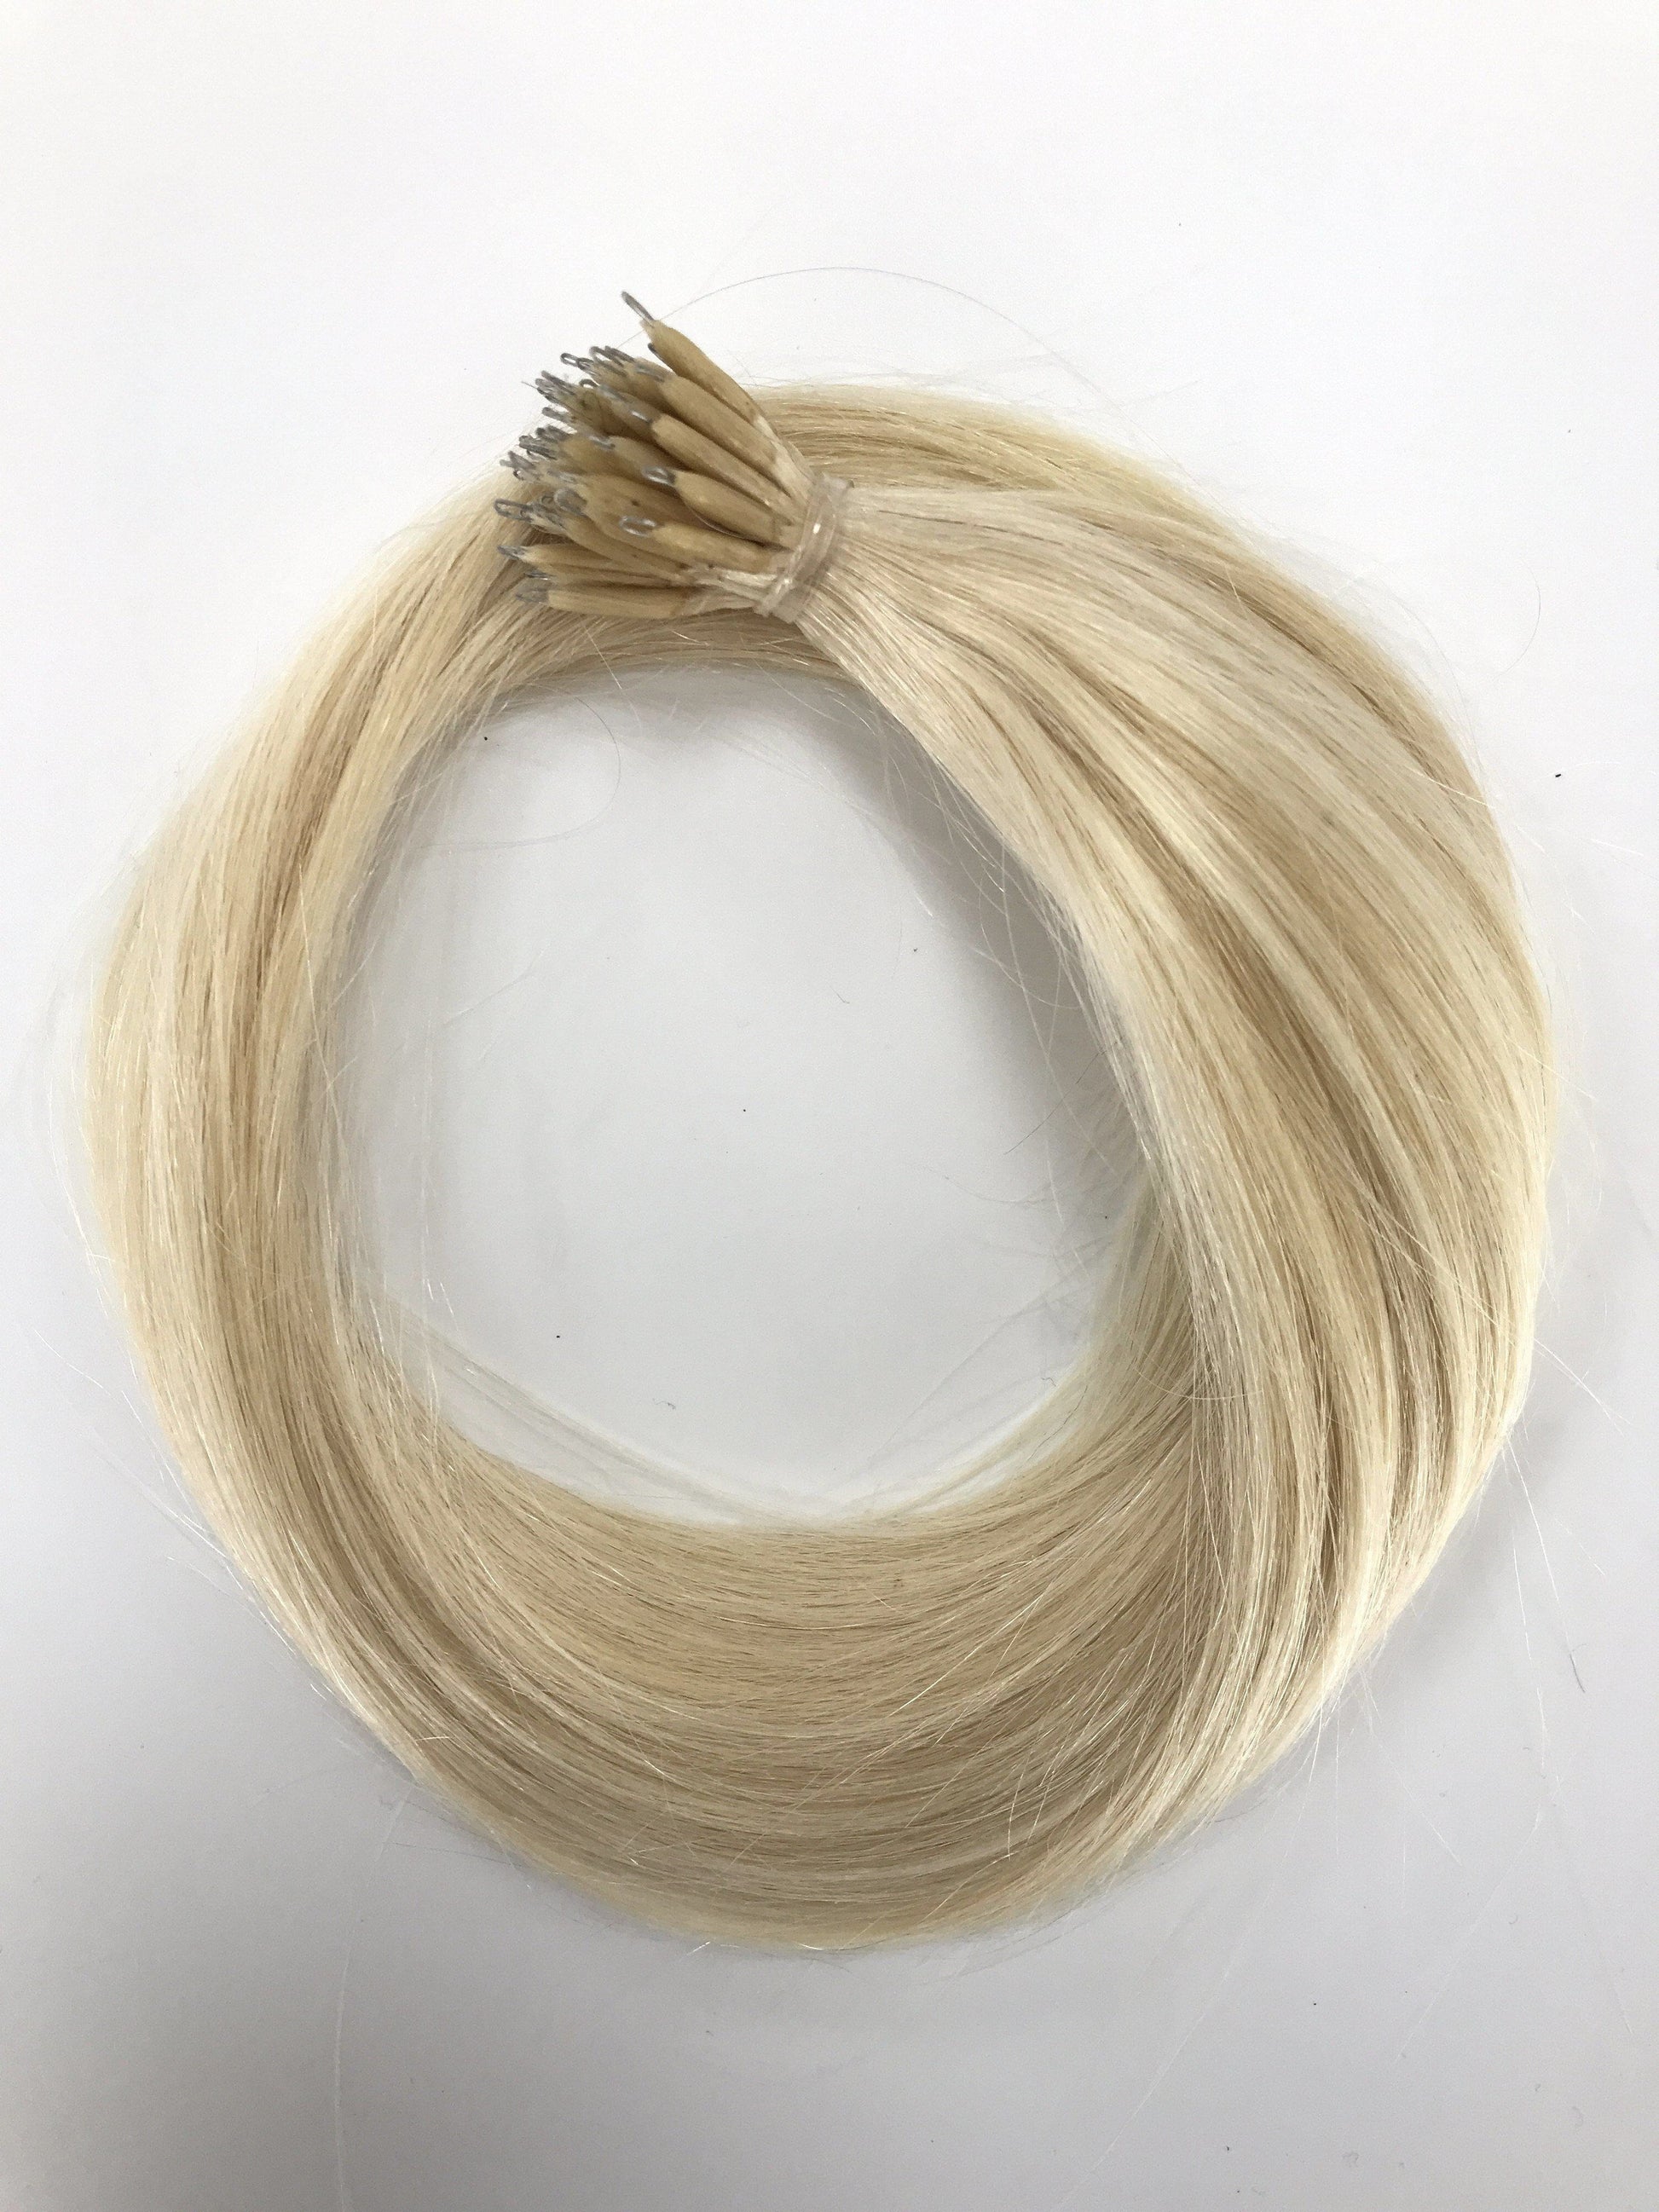 Russian Virgin Remy Human Hair, Nano Ring Extensions, Straight, 20'', Light Blonde Colour 613 . Quick Shipping!-Virgin Hair & Beauty, The Best Hair Extensions, Real Virgin Human Hair.